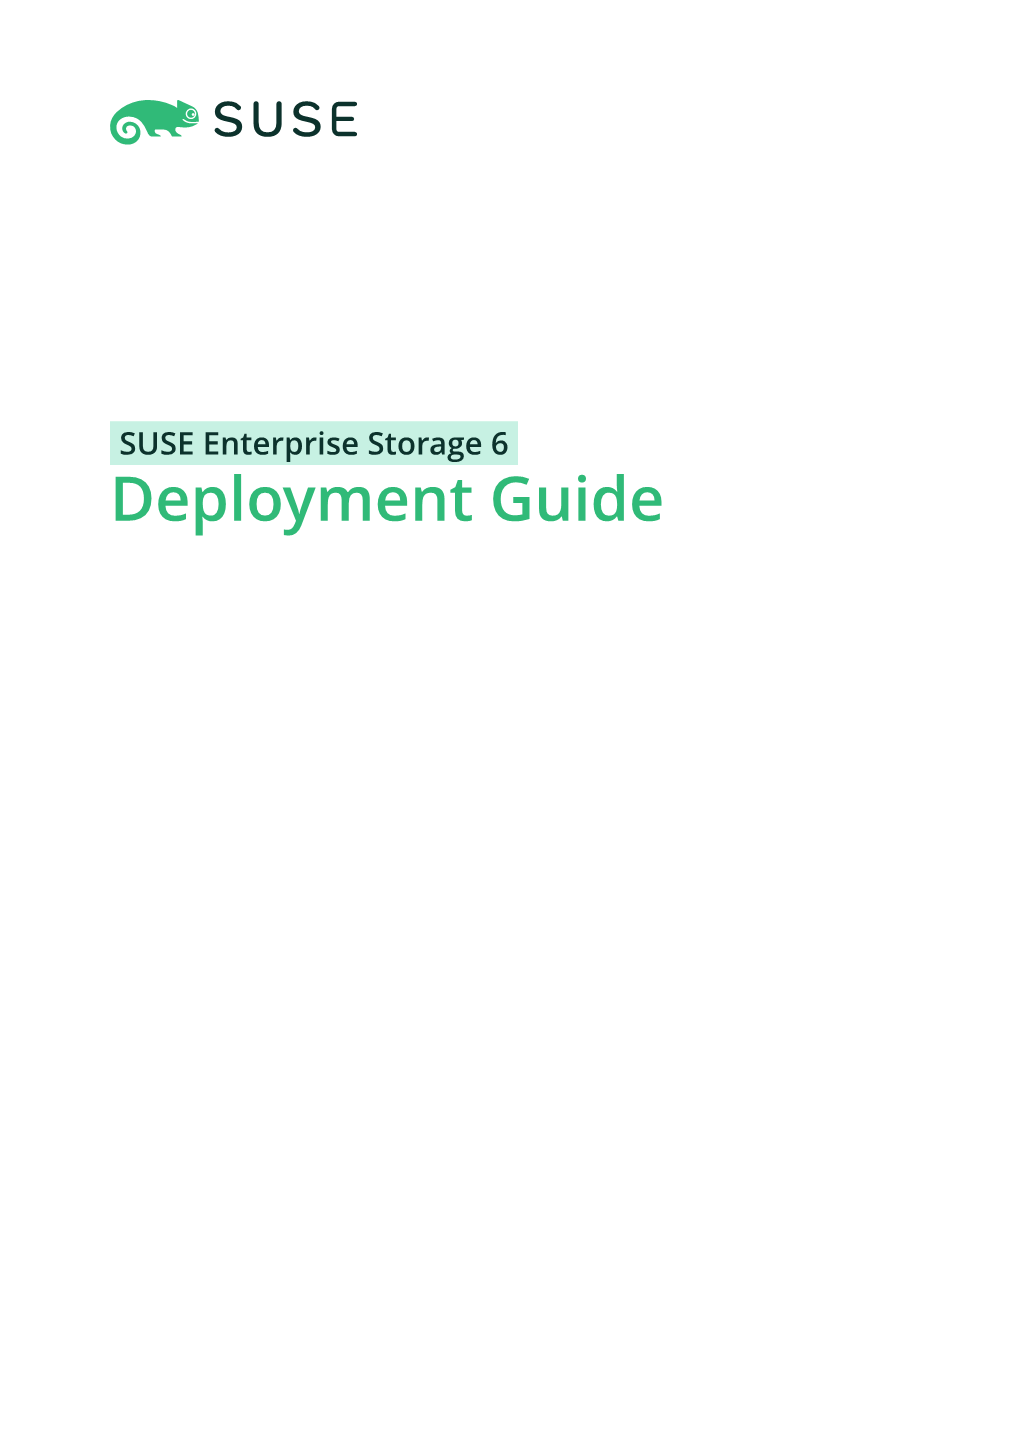 Deployment Guide Deployment Guide SUSE Enterprise Storage 6 by Tomáš Bažant, Alexandra Settle, Liam Proven, and Sven Seeberg